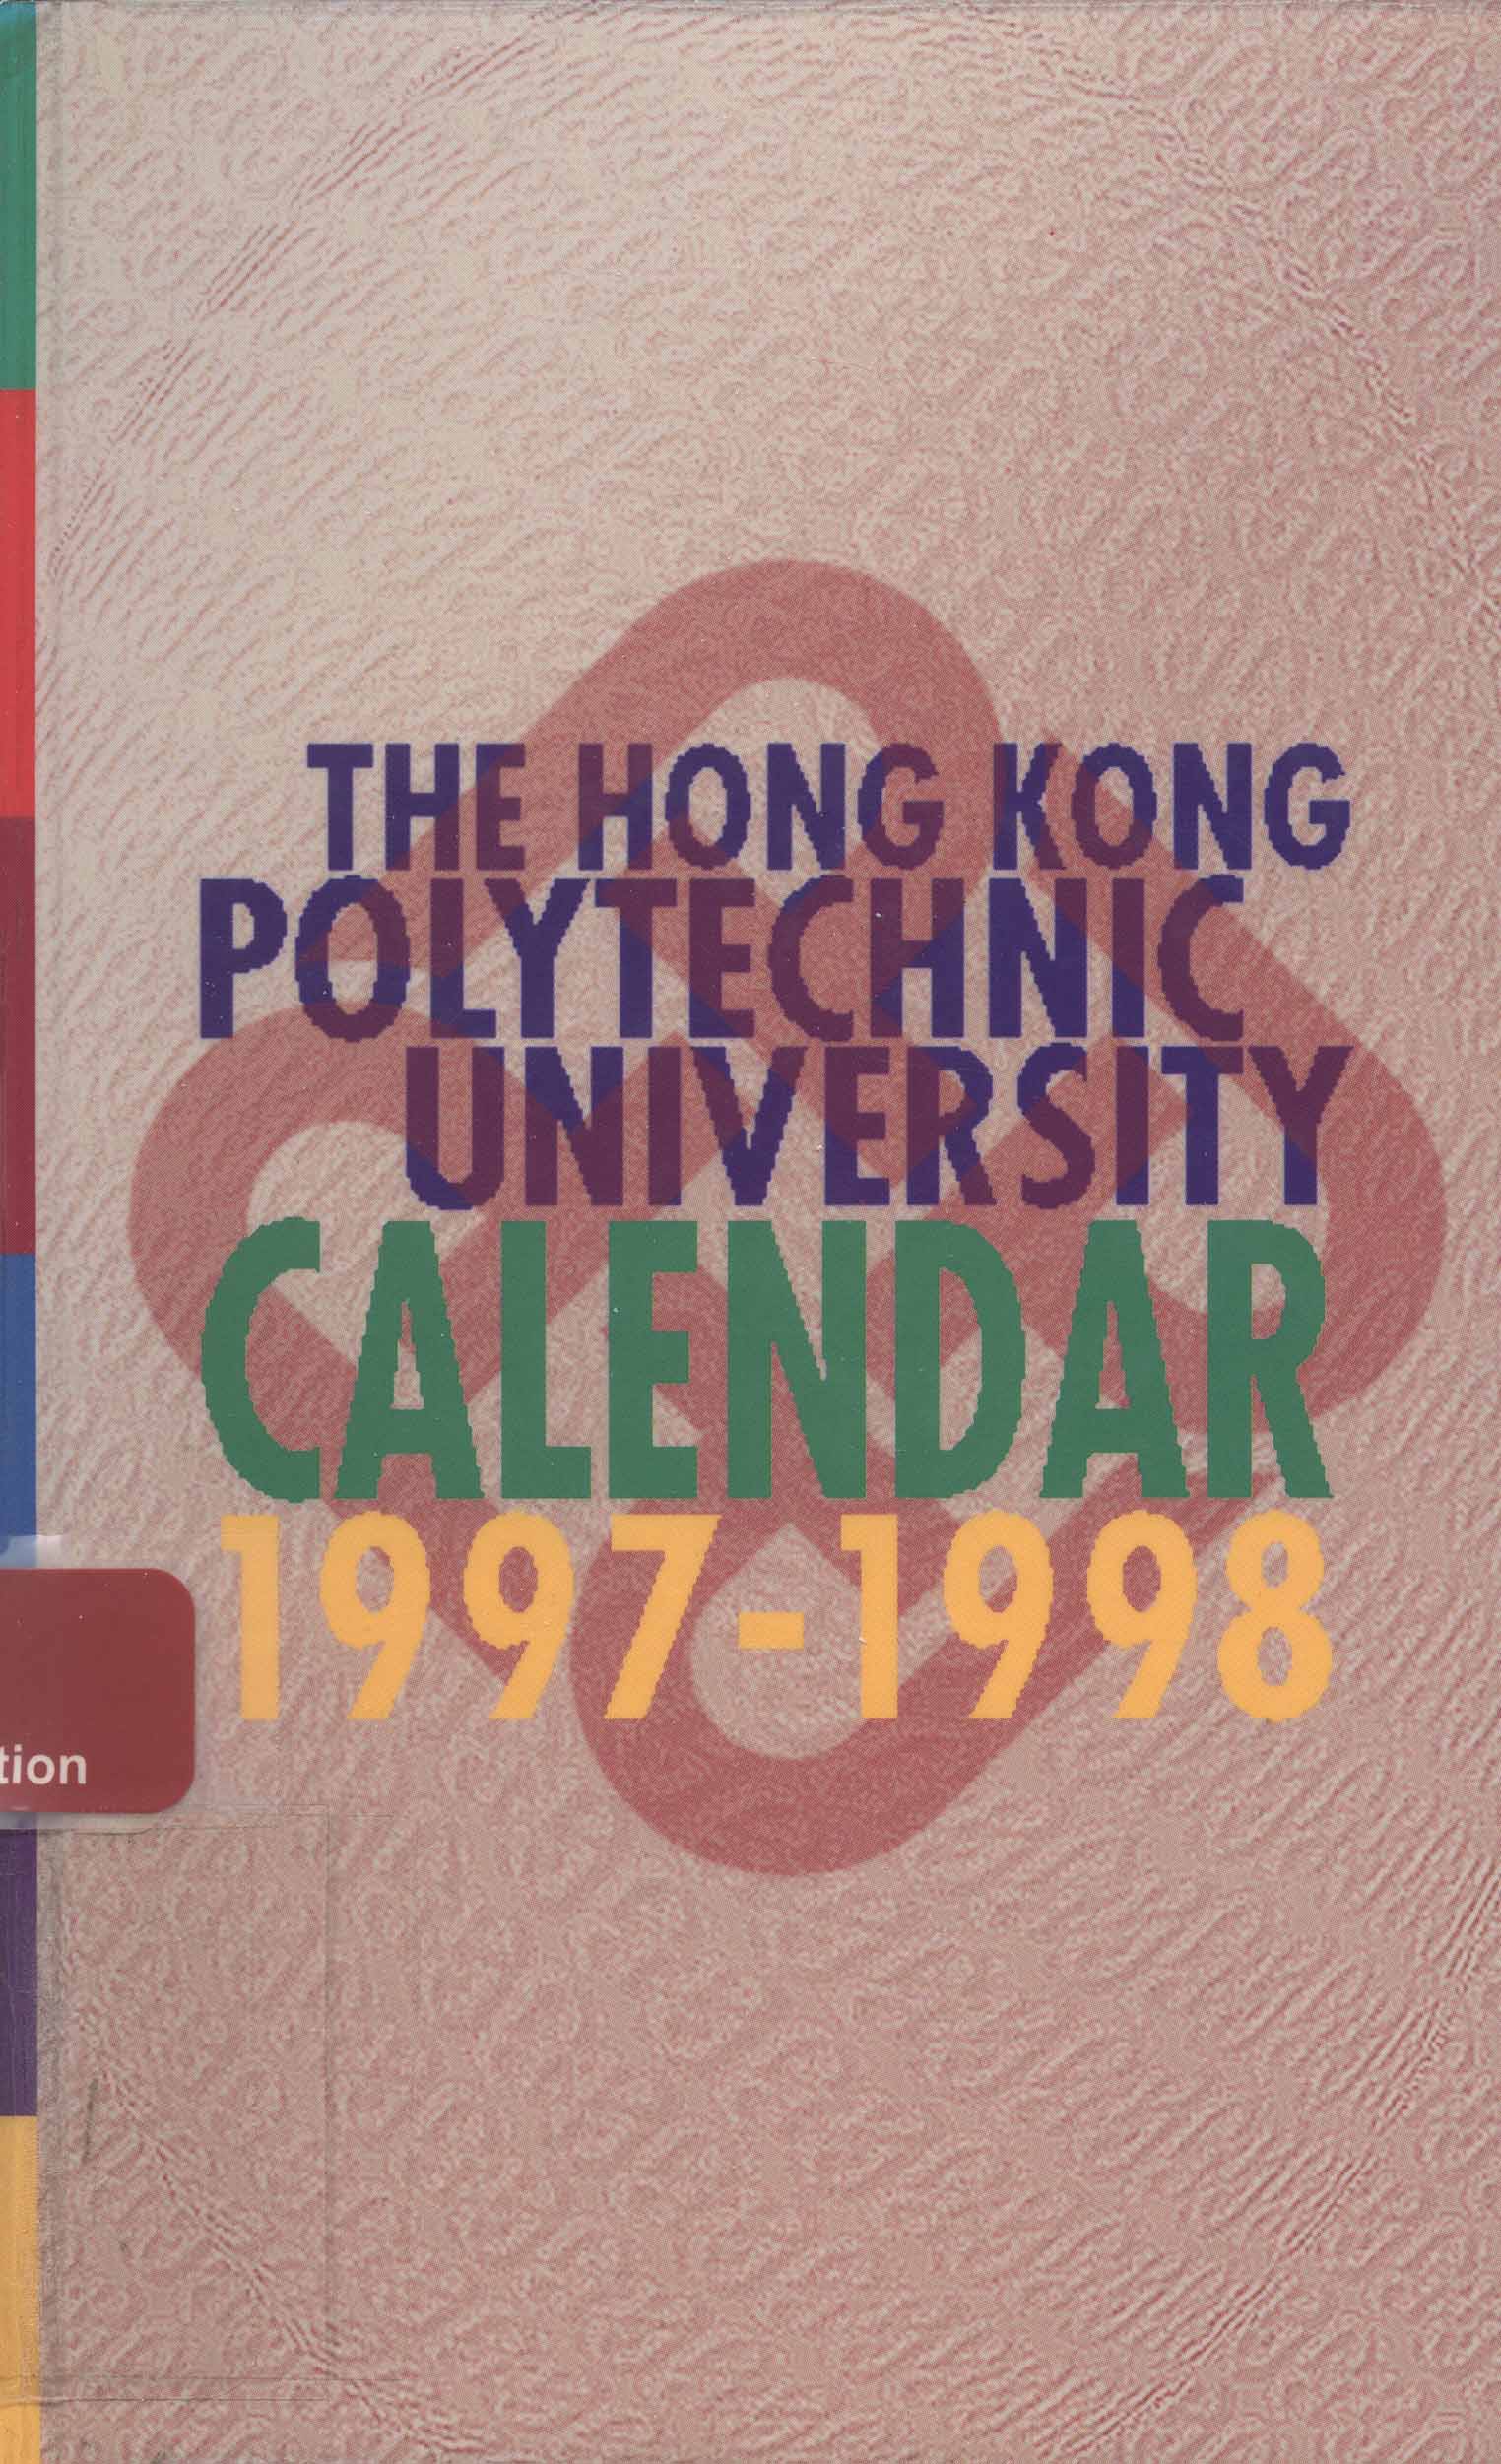 The Hong Kong Polytechnic University Calendar [1997-1998]